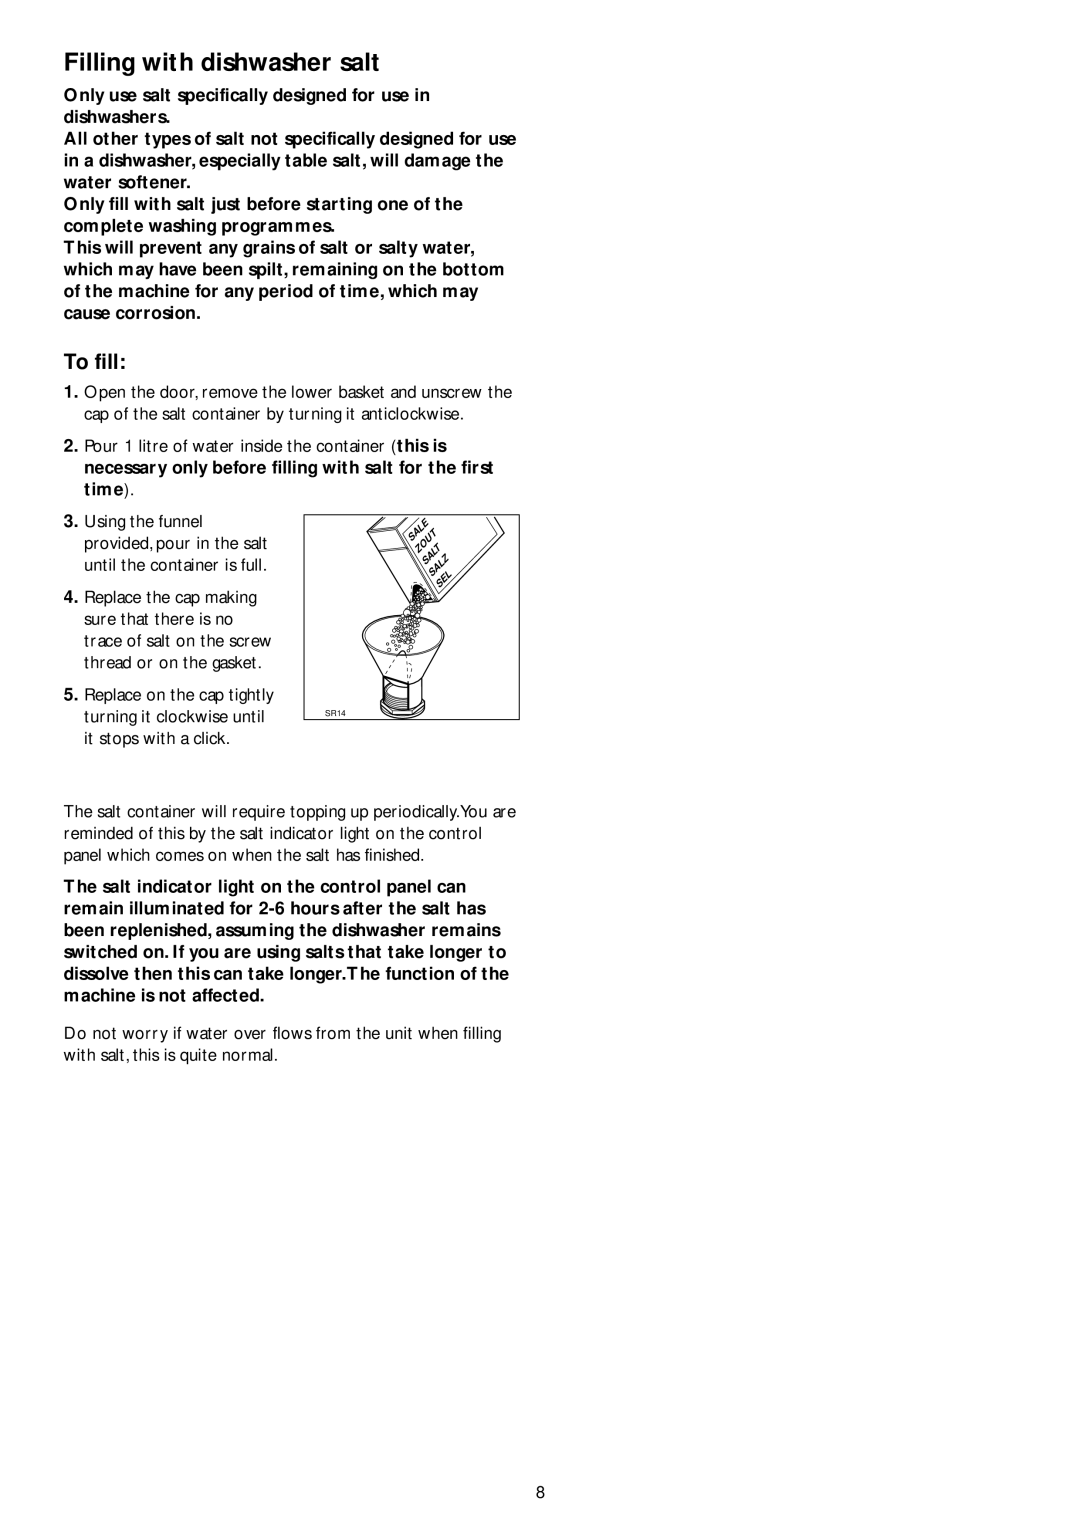 John Lewis JLDWW 1201 instruction manual Filling with dishwasher salt, To fill 